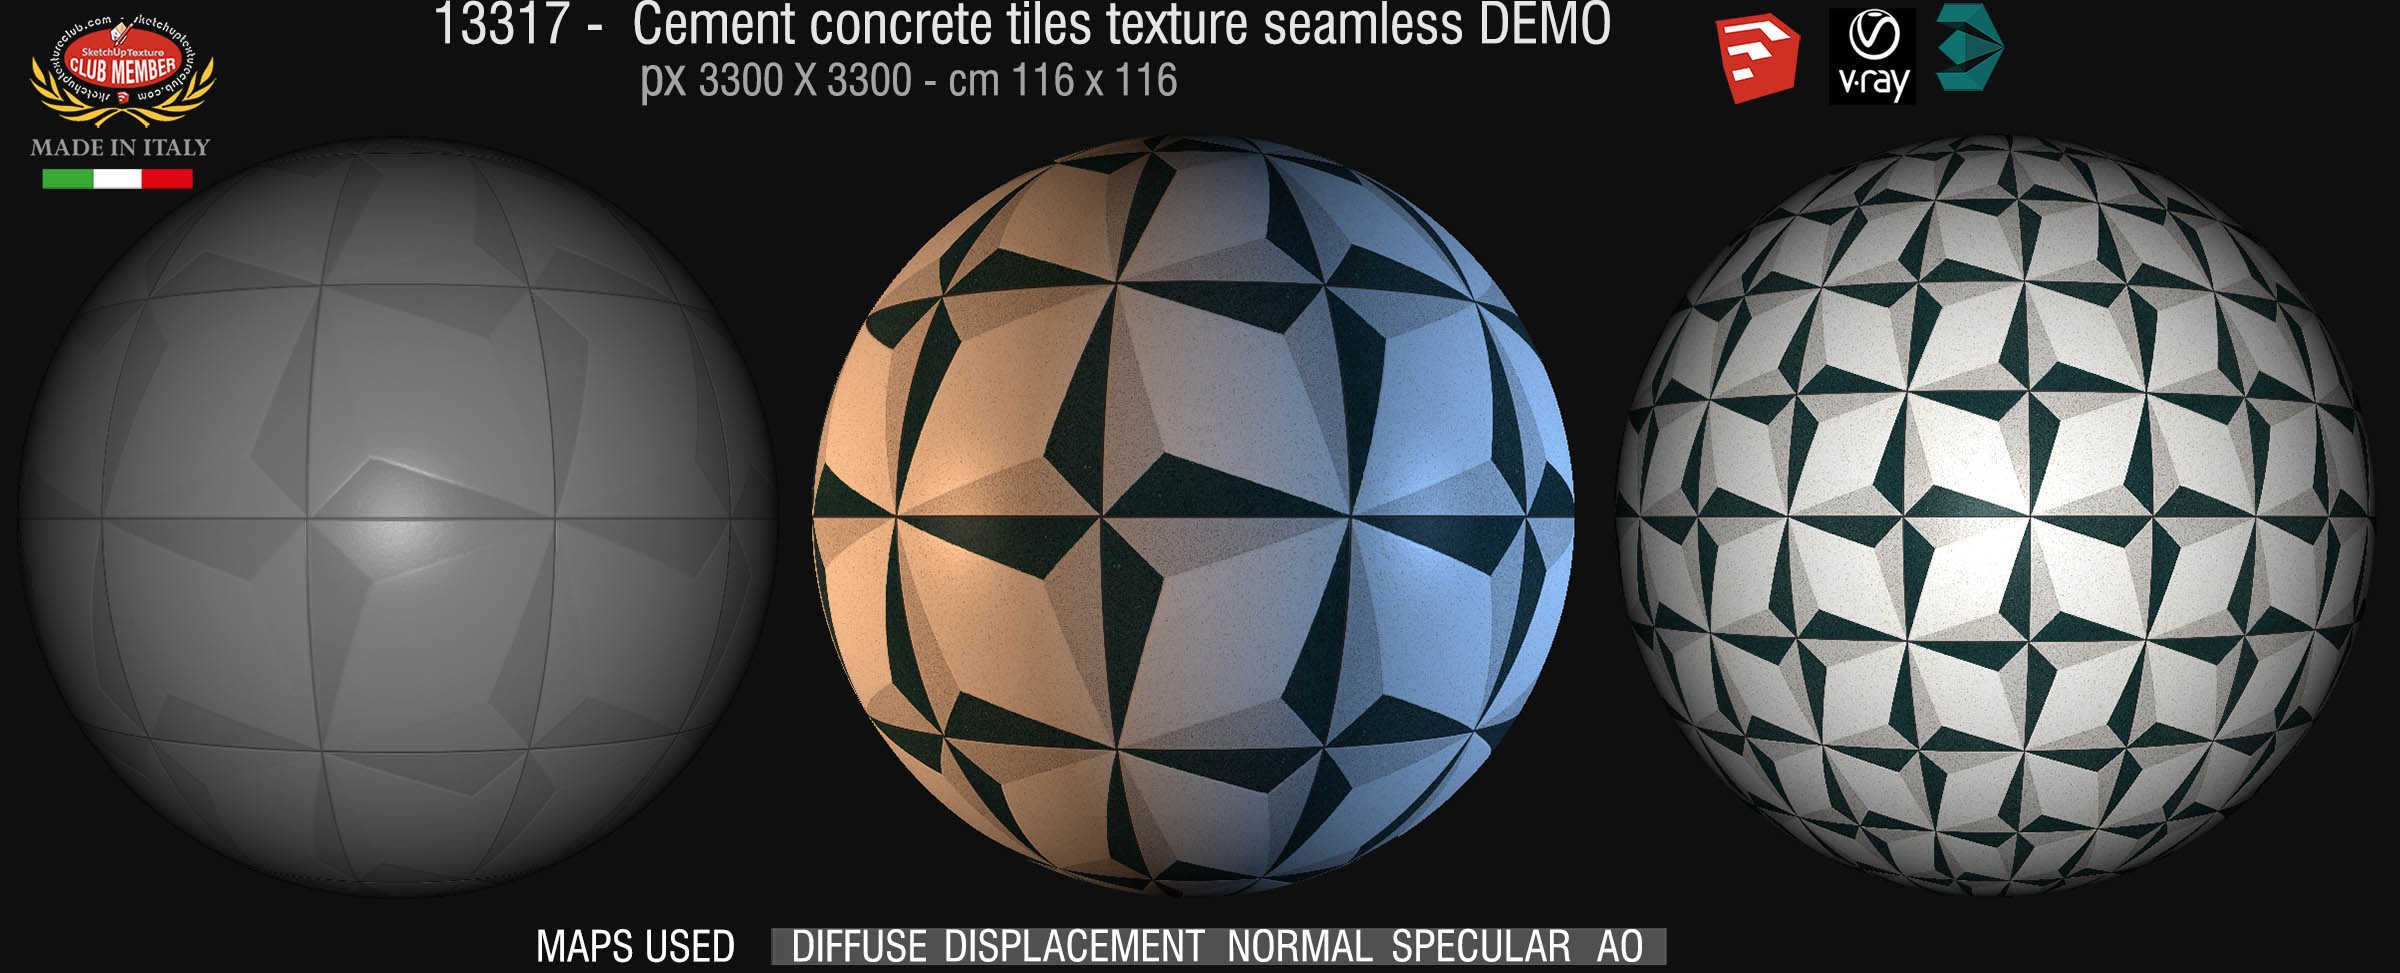 13317 Cement concrete tile texture seamless + maps DEMO